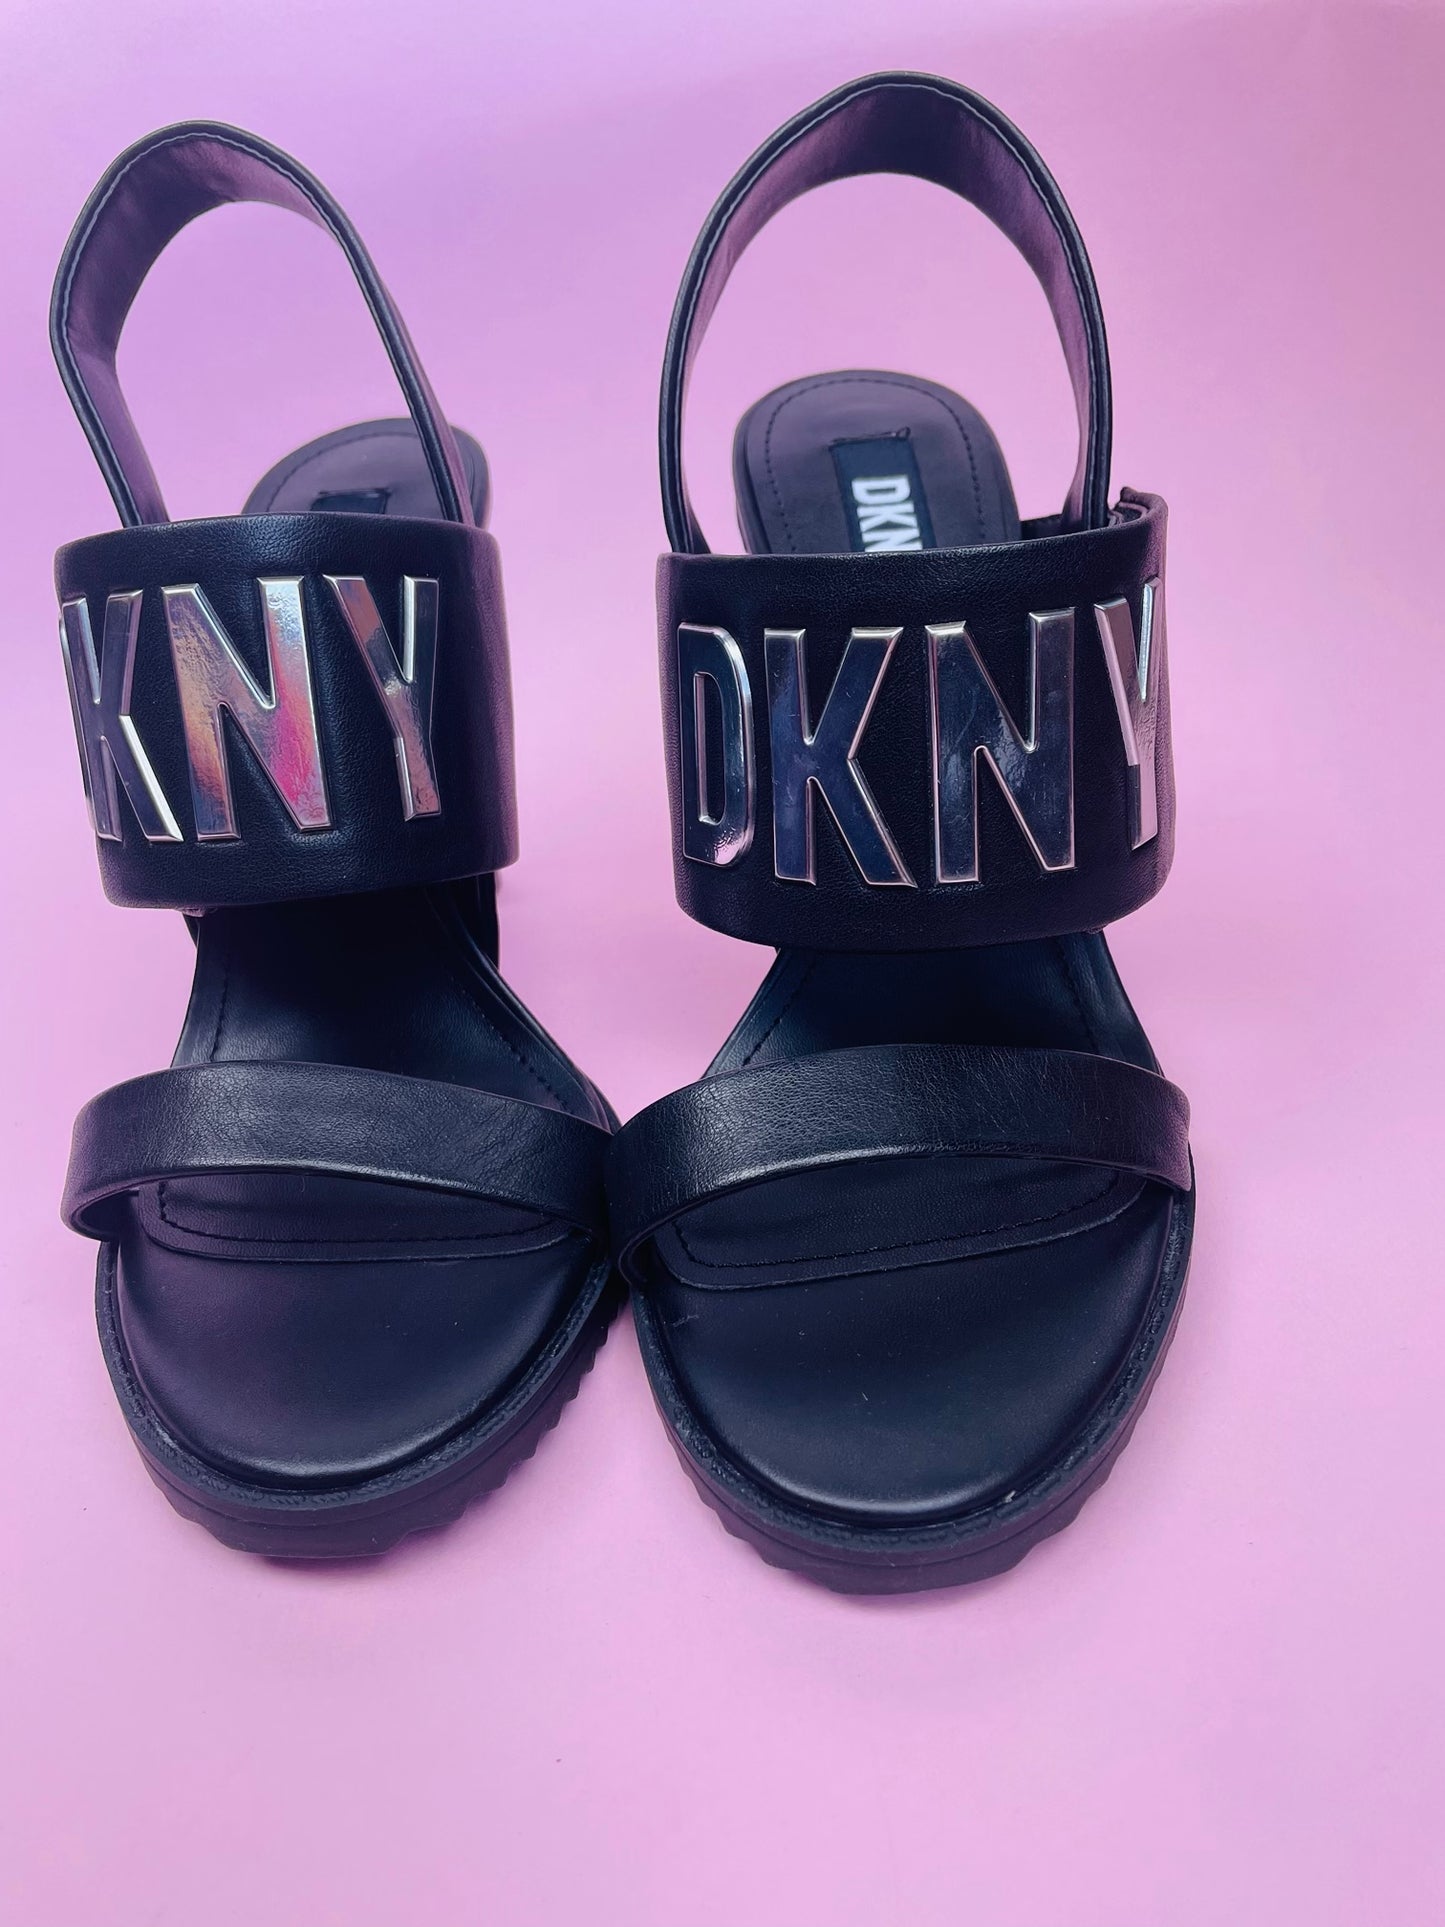 Dkny shoes